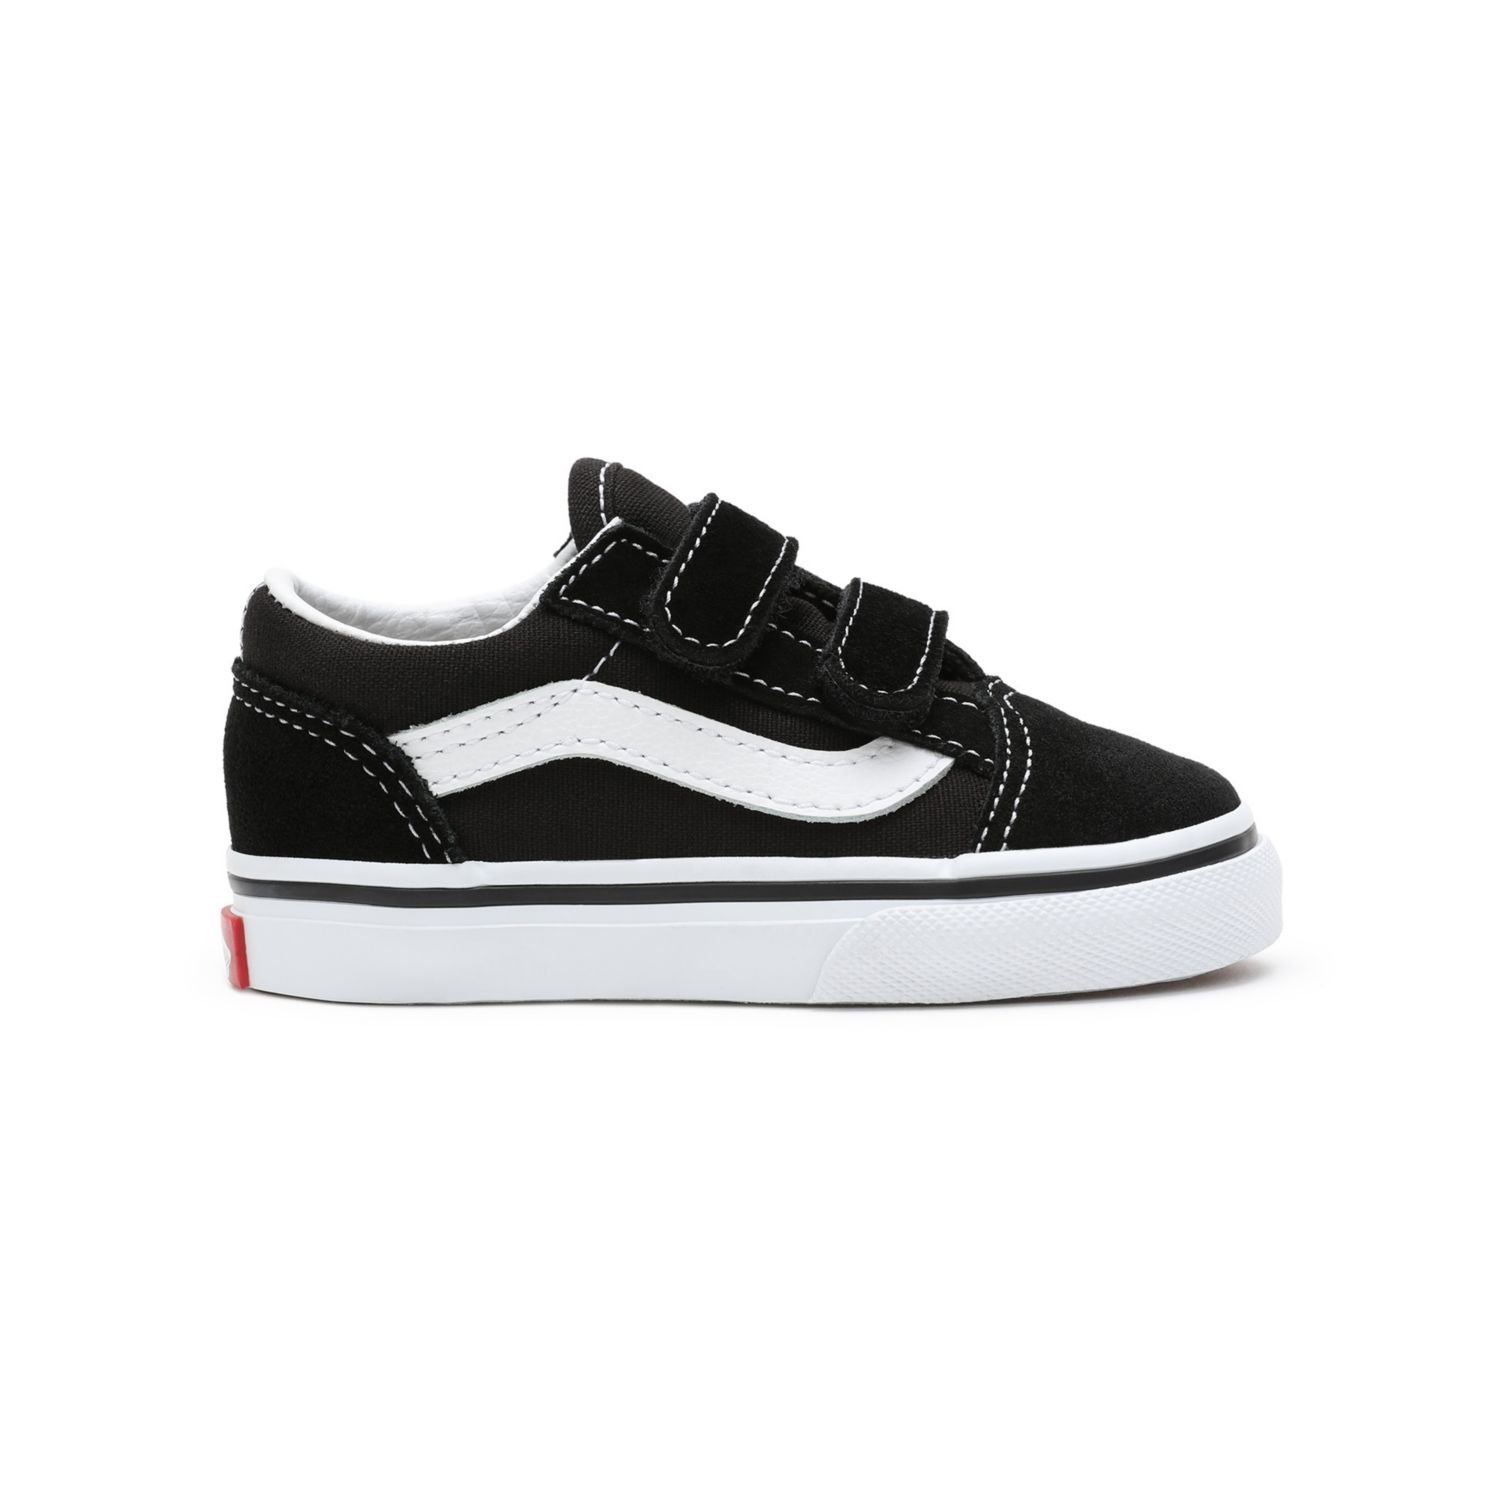 Vans Old Skool Shoes in Black & White — UFO No More